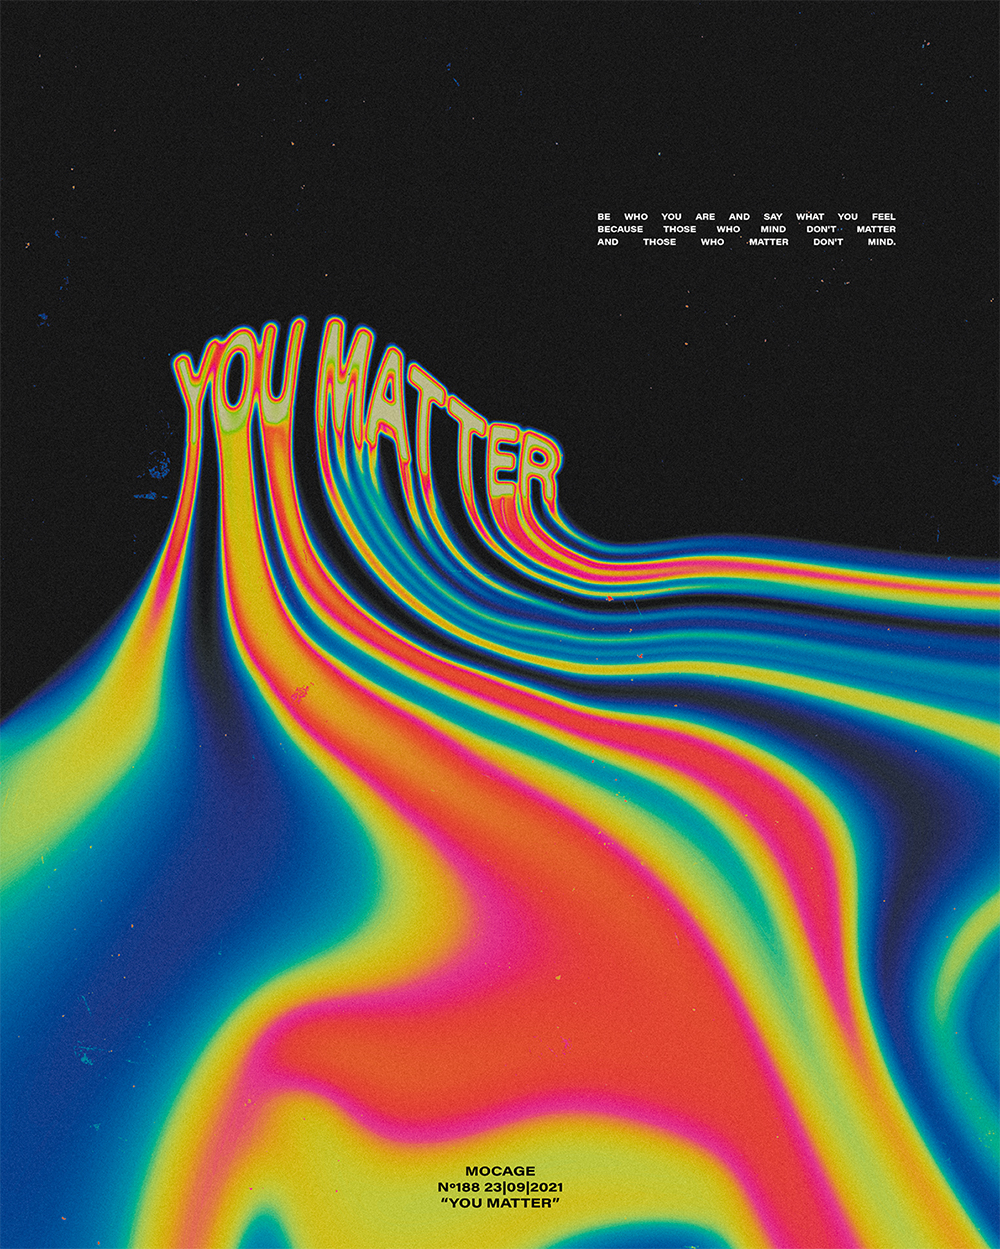 “You matter”